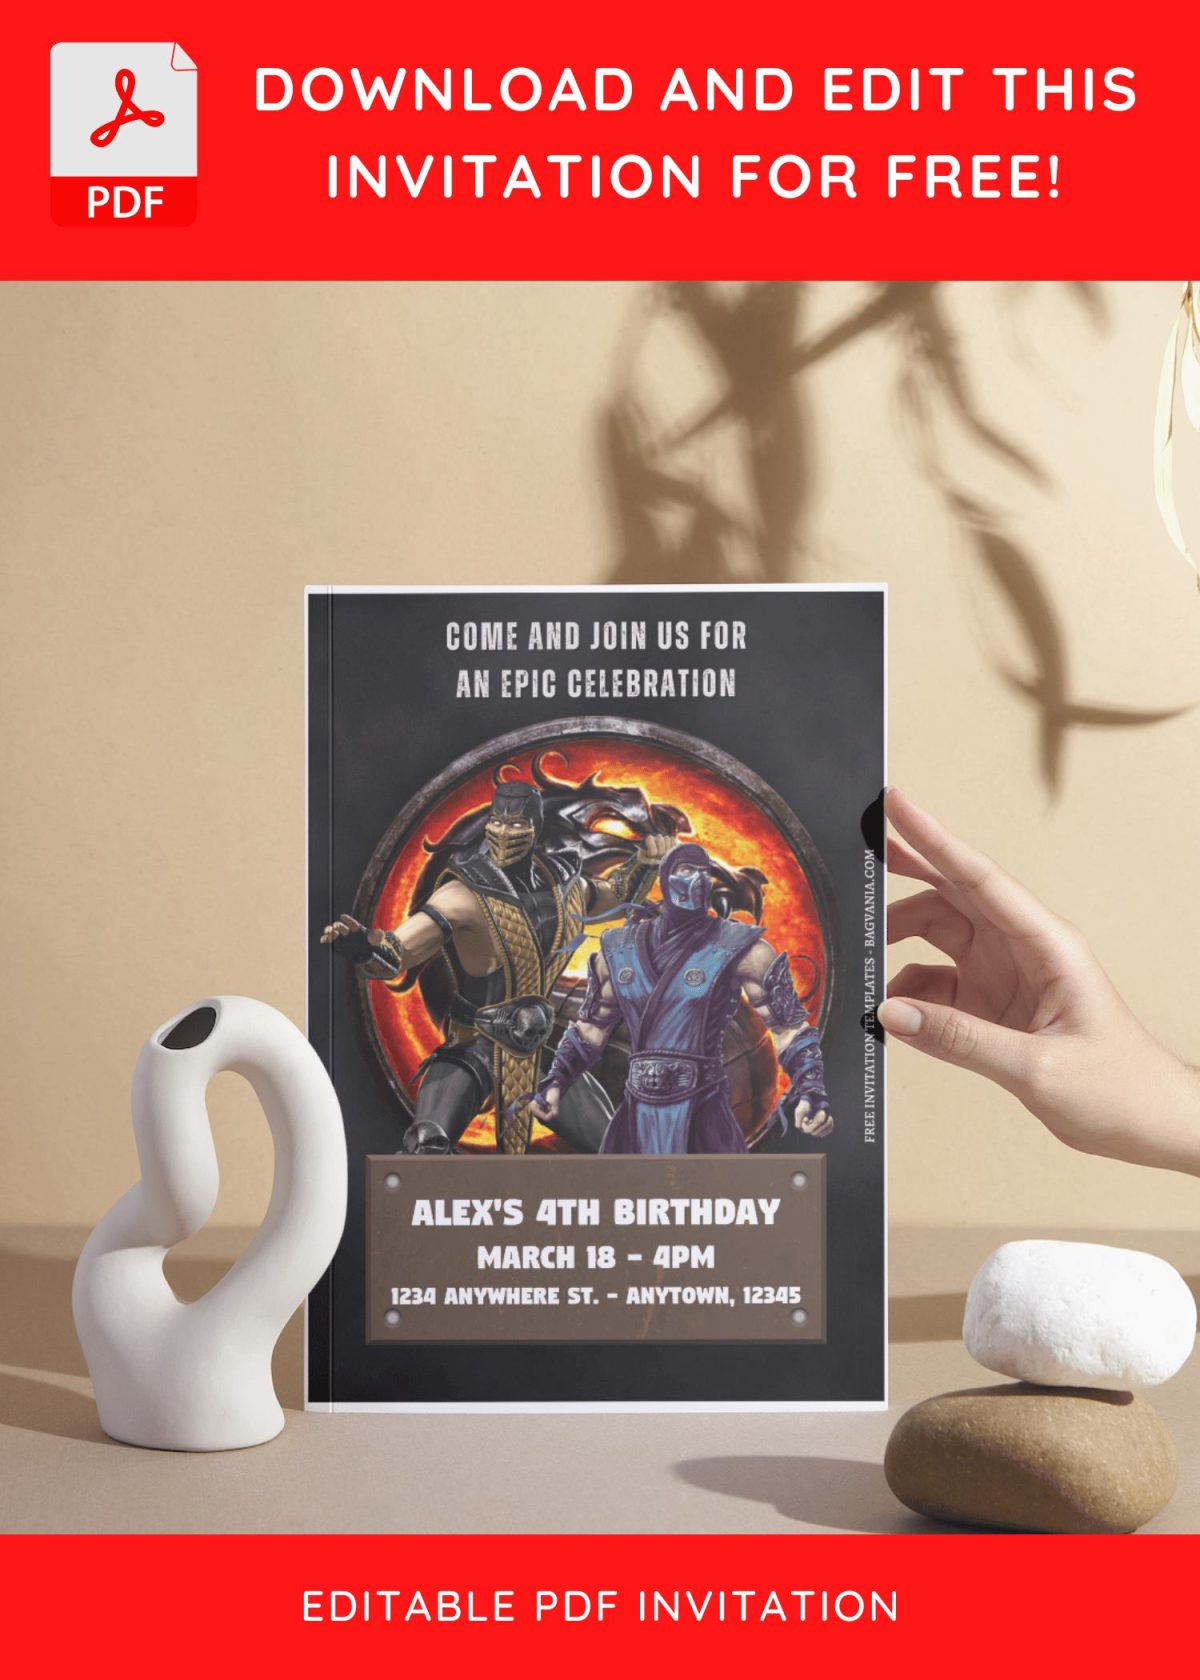 (Free Editable PDF) Ultimate Mortal Kombat Birthday Invitation Templates I